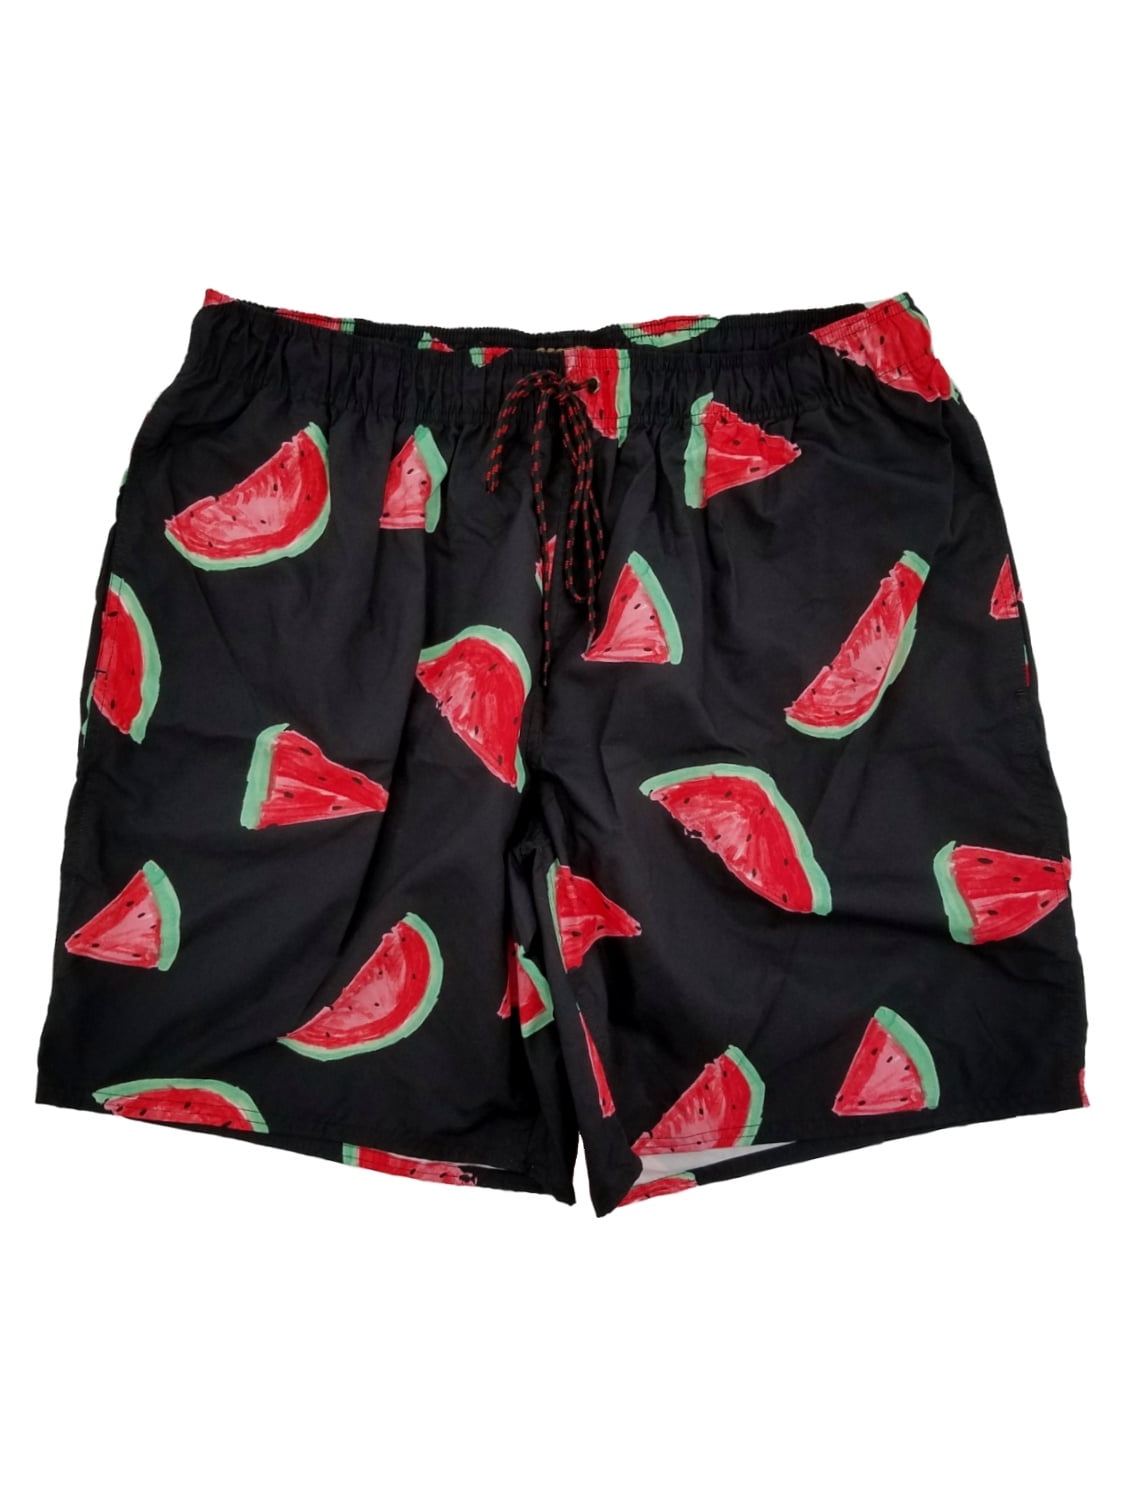 On Cue Apparel Watermelon Shorts